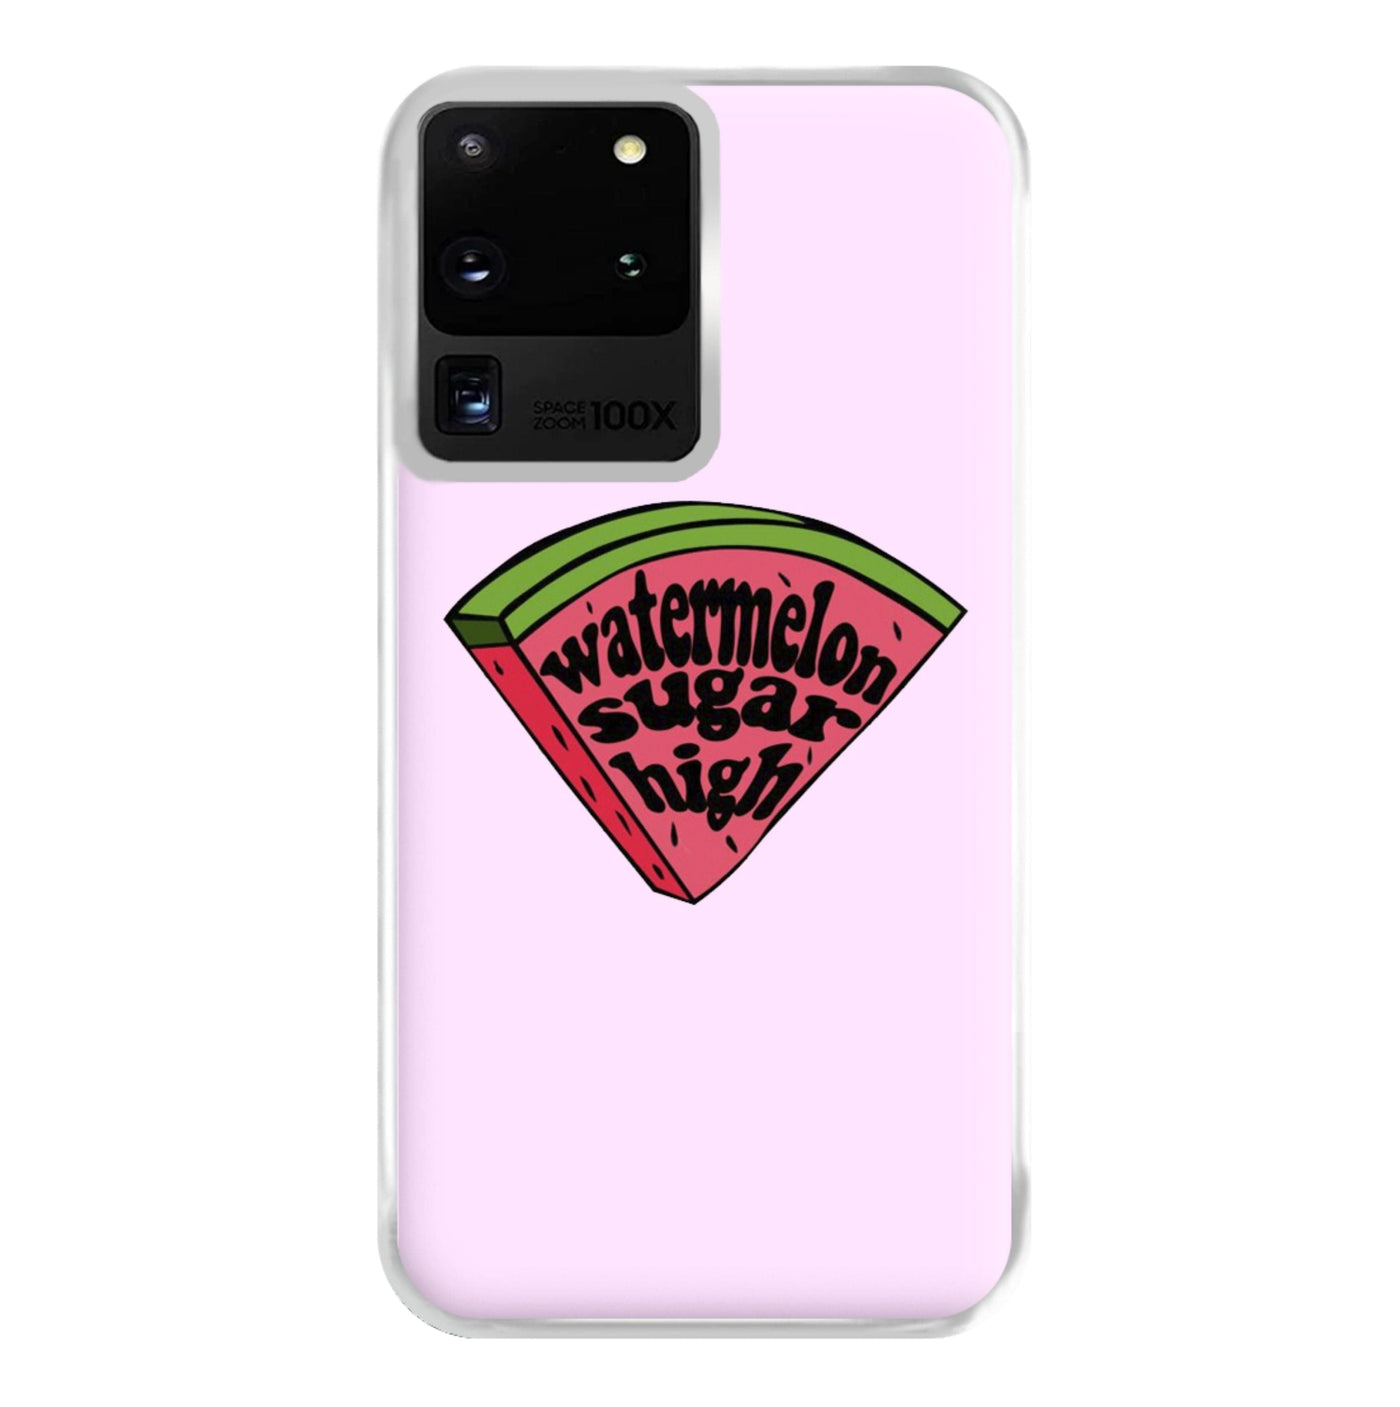 Watermelon Sugar High - Harry Phone Case